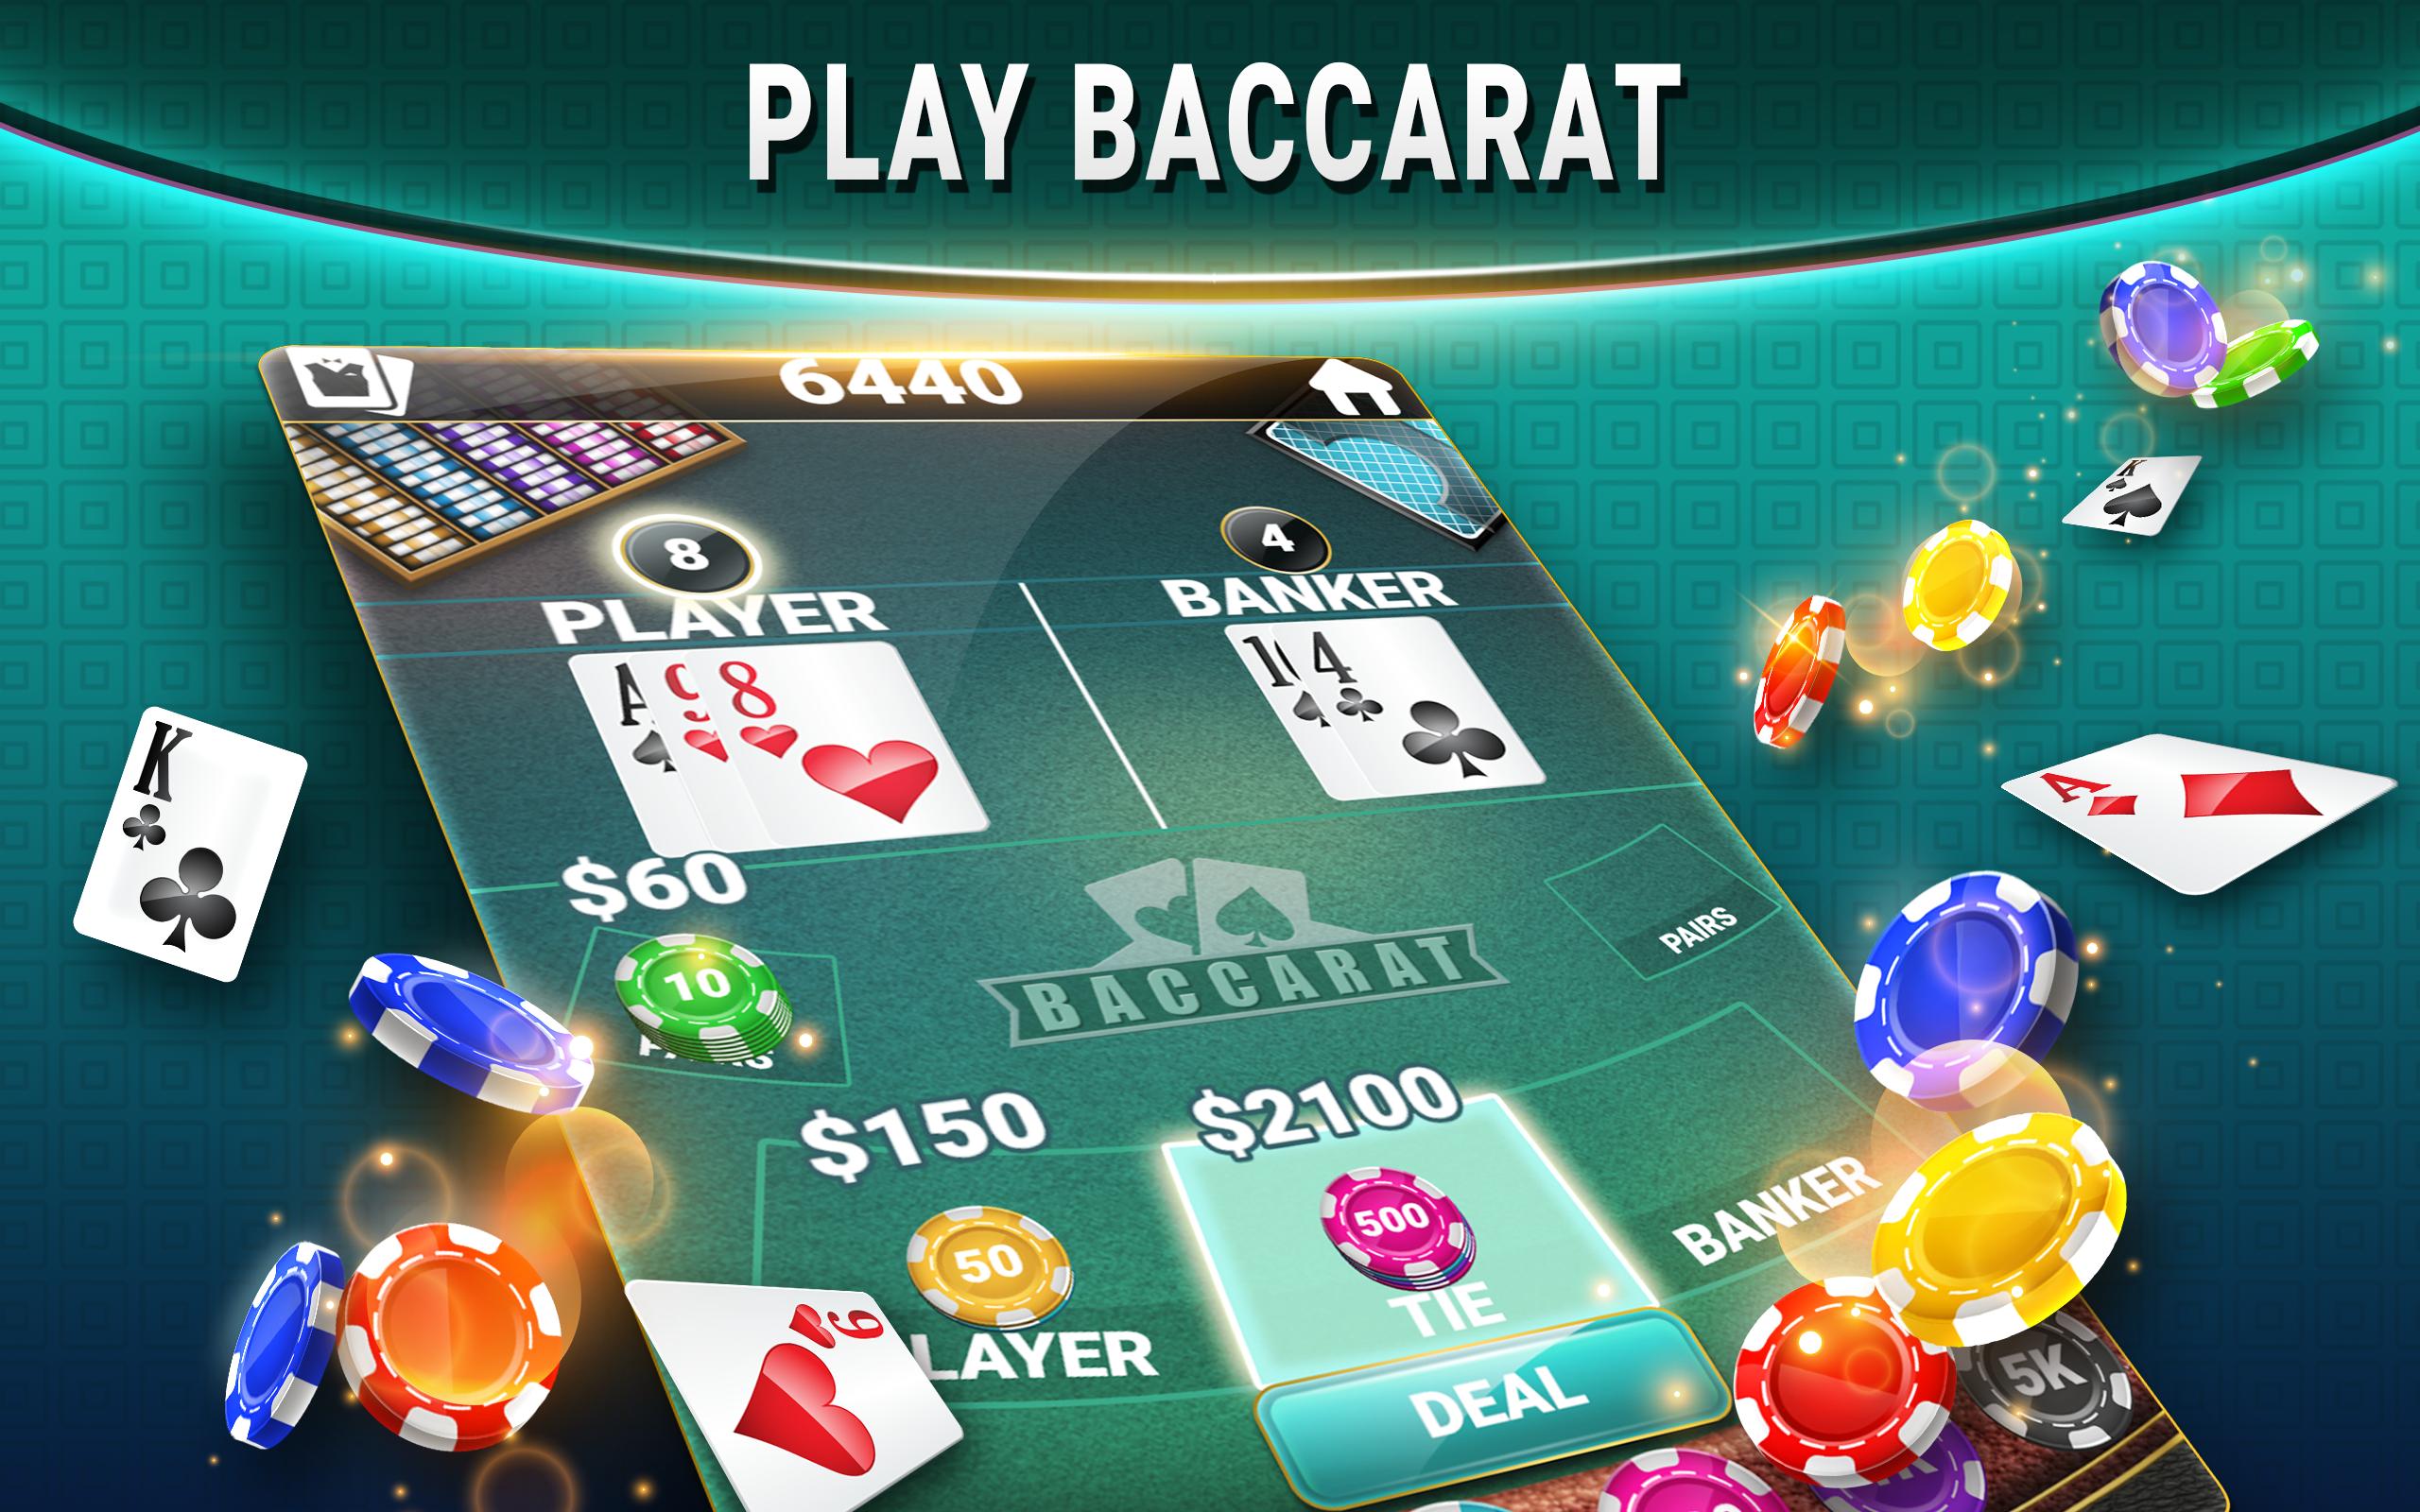 Unleash the Cards: Free Online Poker Adventures Await